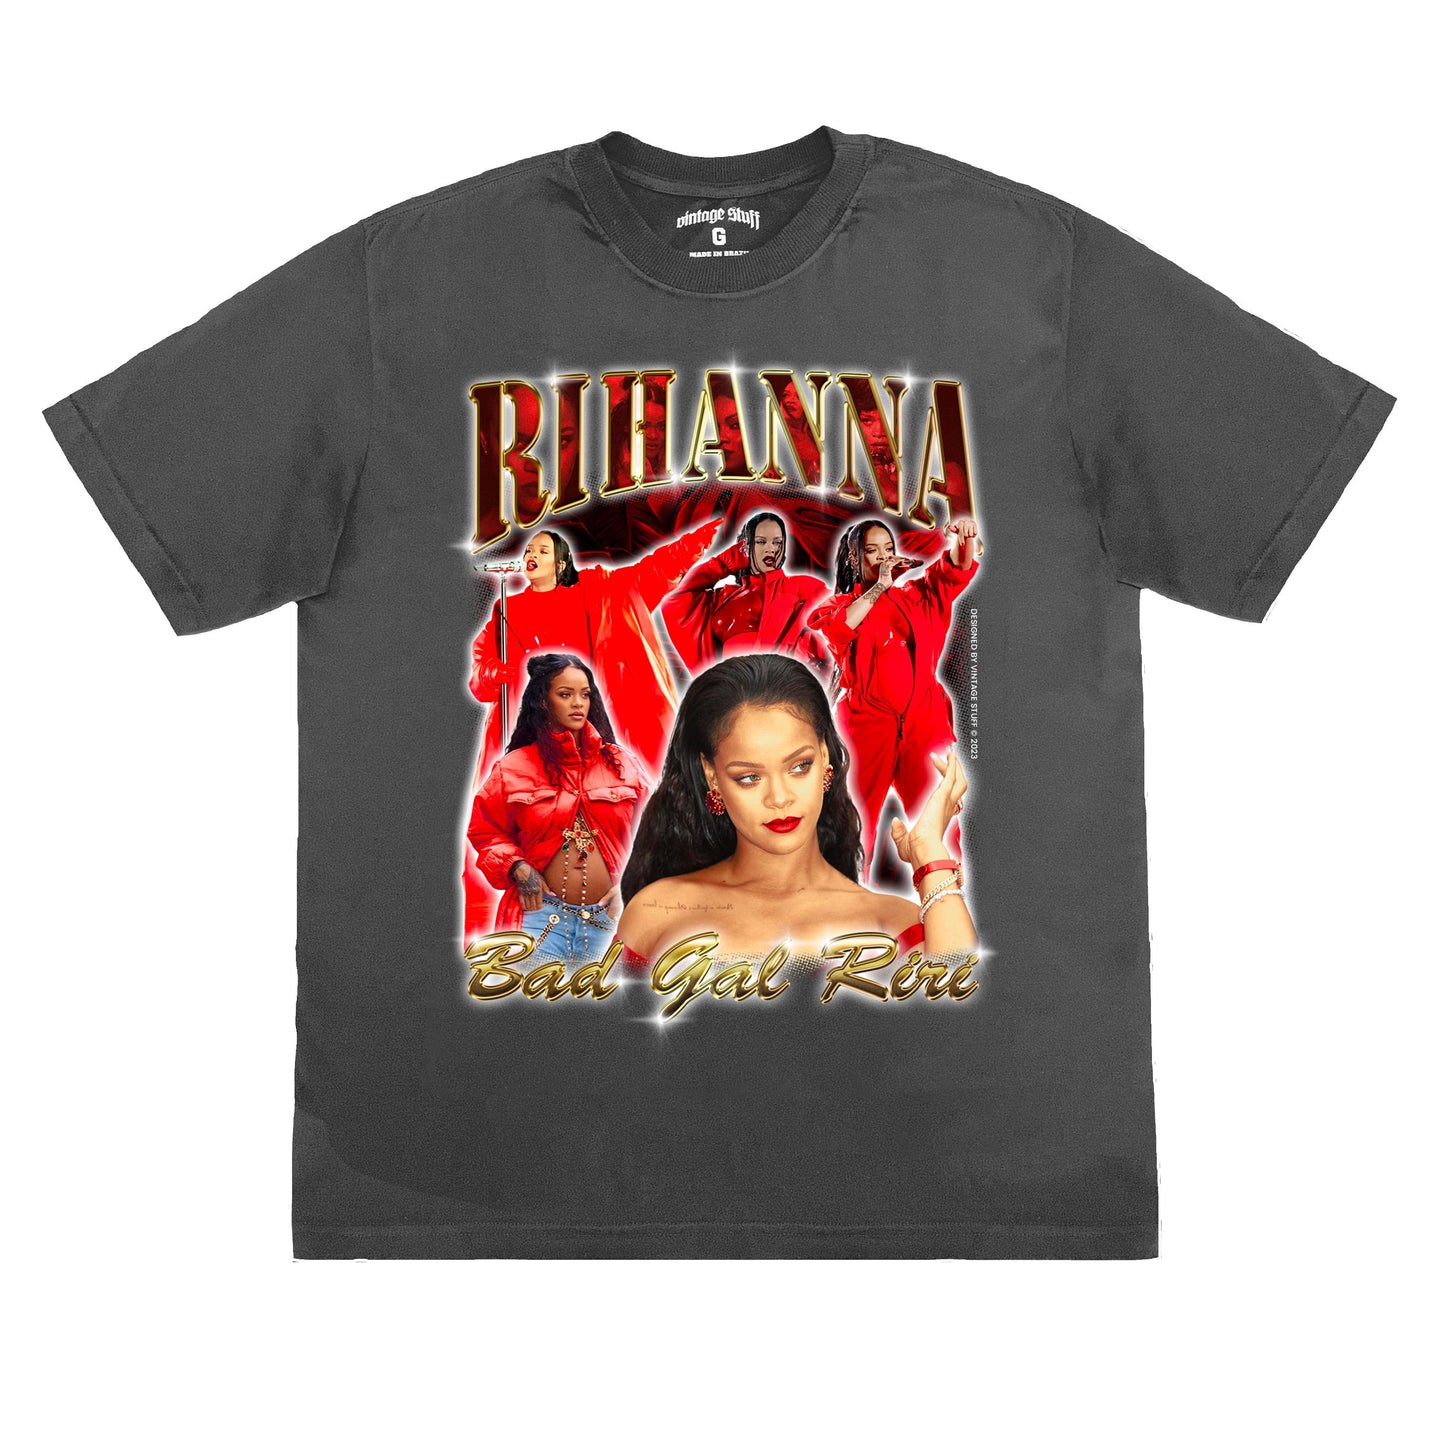 Camiseta Rihanna "Bad Gal Riri"